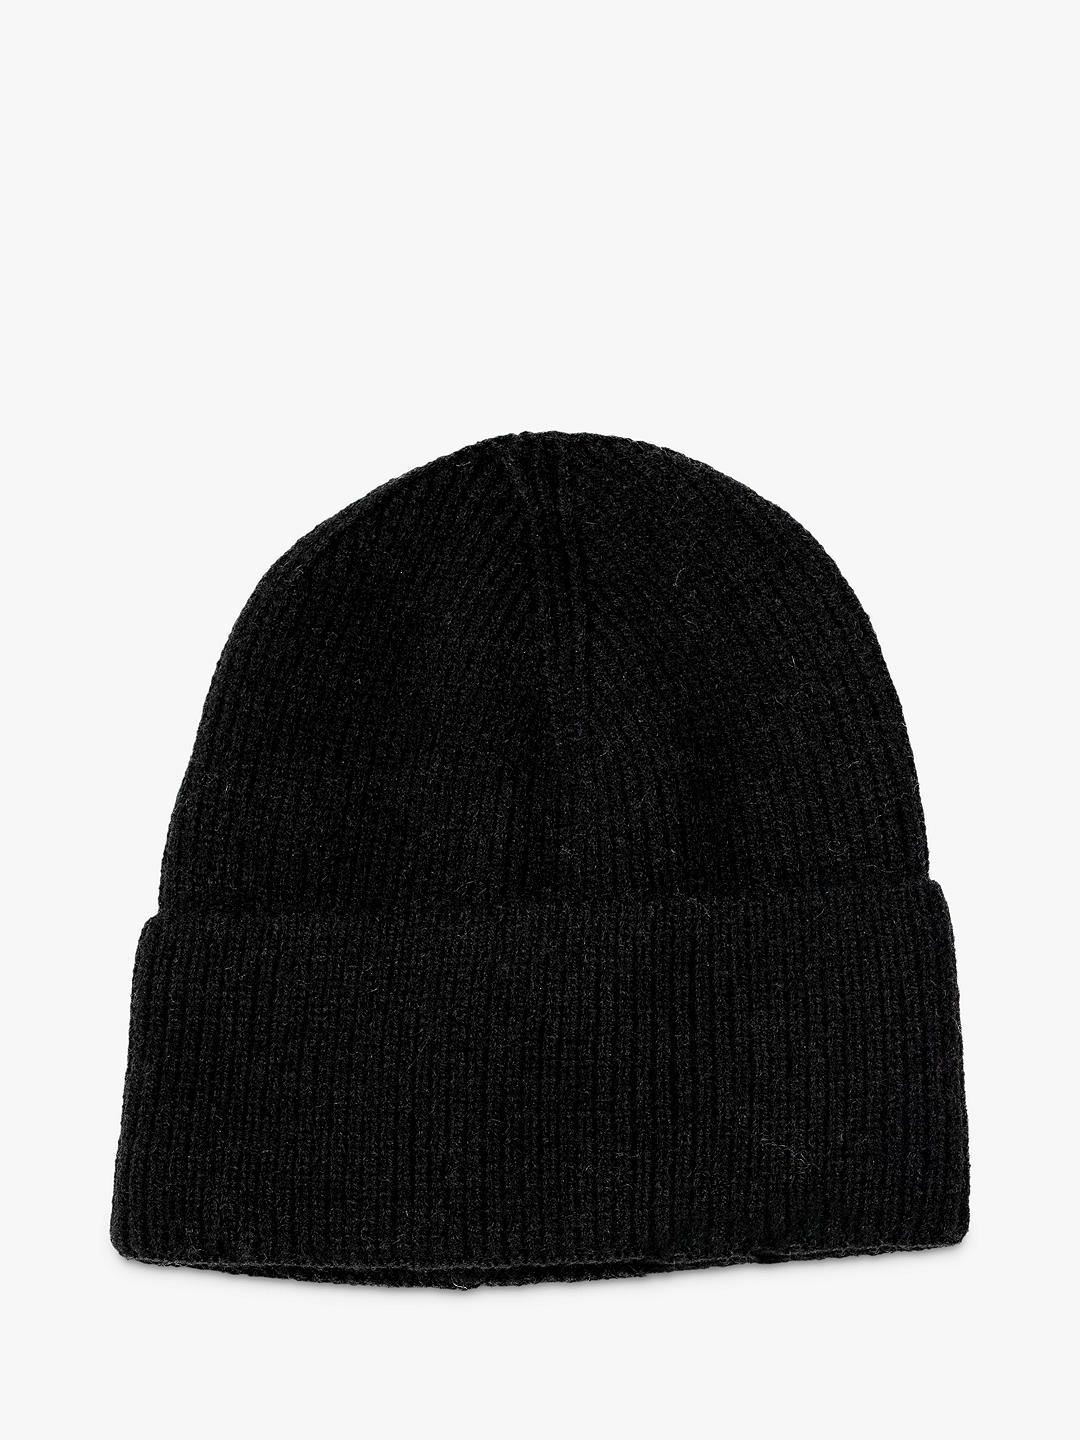 Bloom & Bay Laurel Rib Knit Beanie Hat, Black